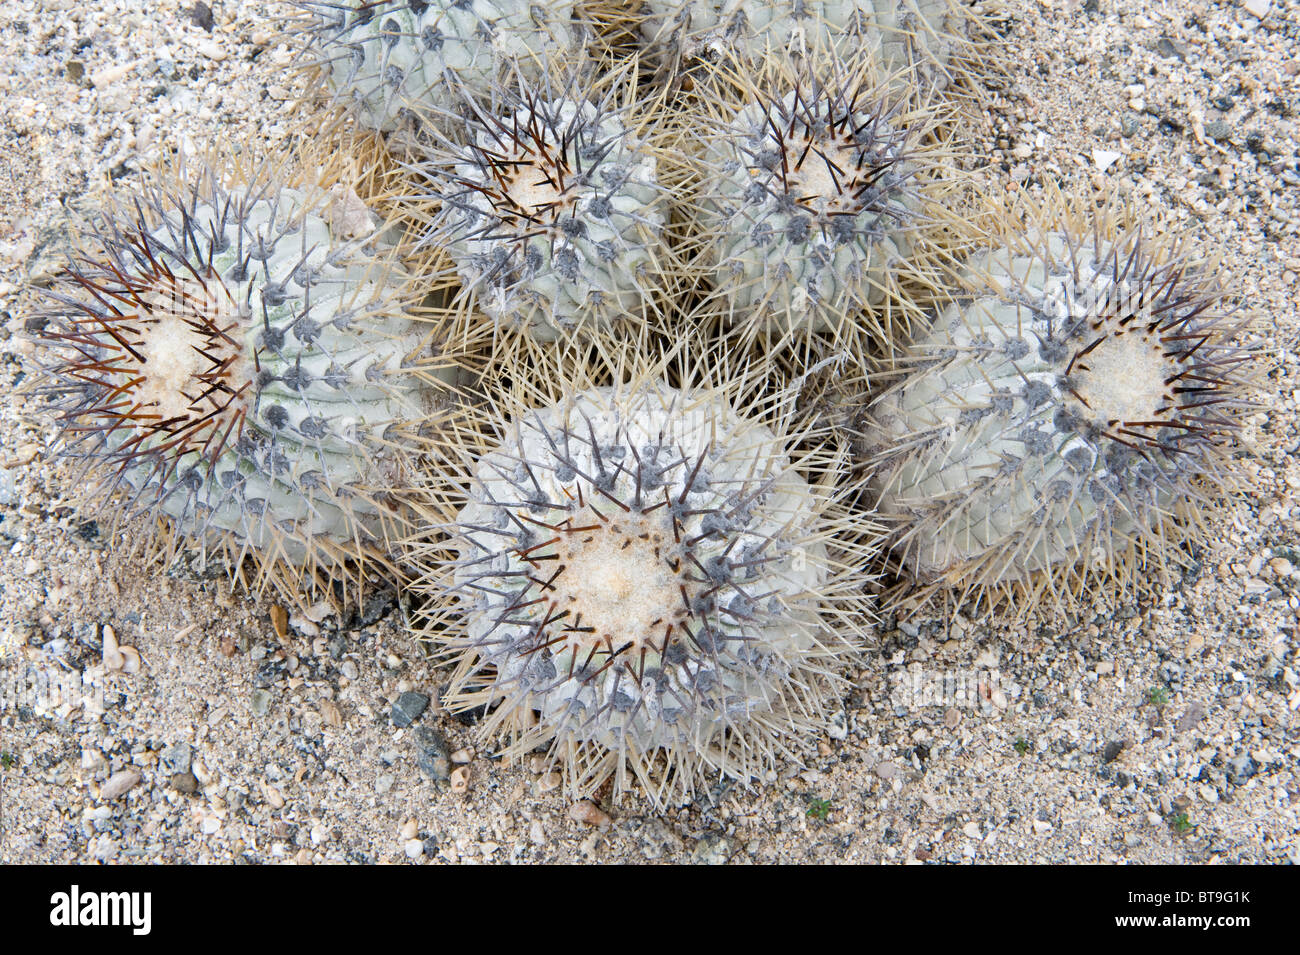 Copiapoa longistaminea is one of over 20 cacti growing in Parque National Pan de Azucar Atacama Chile South America Stock Photo